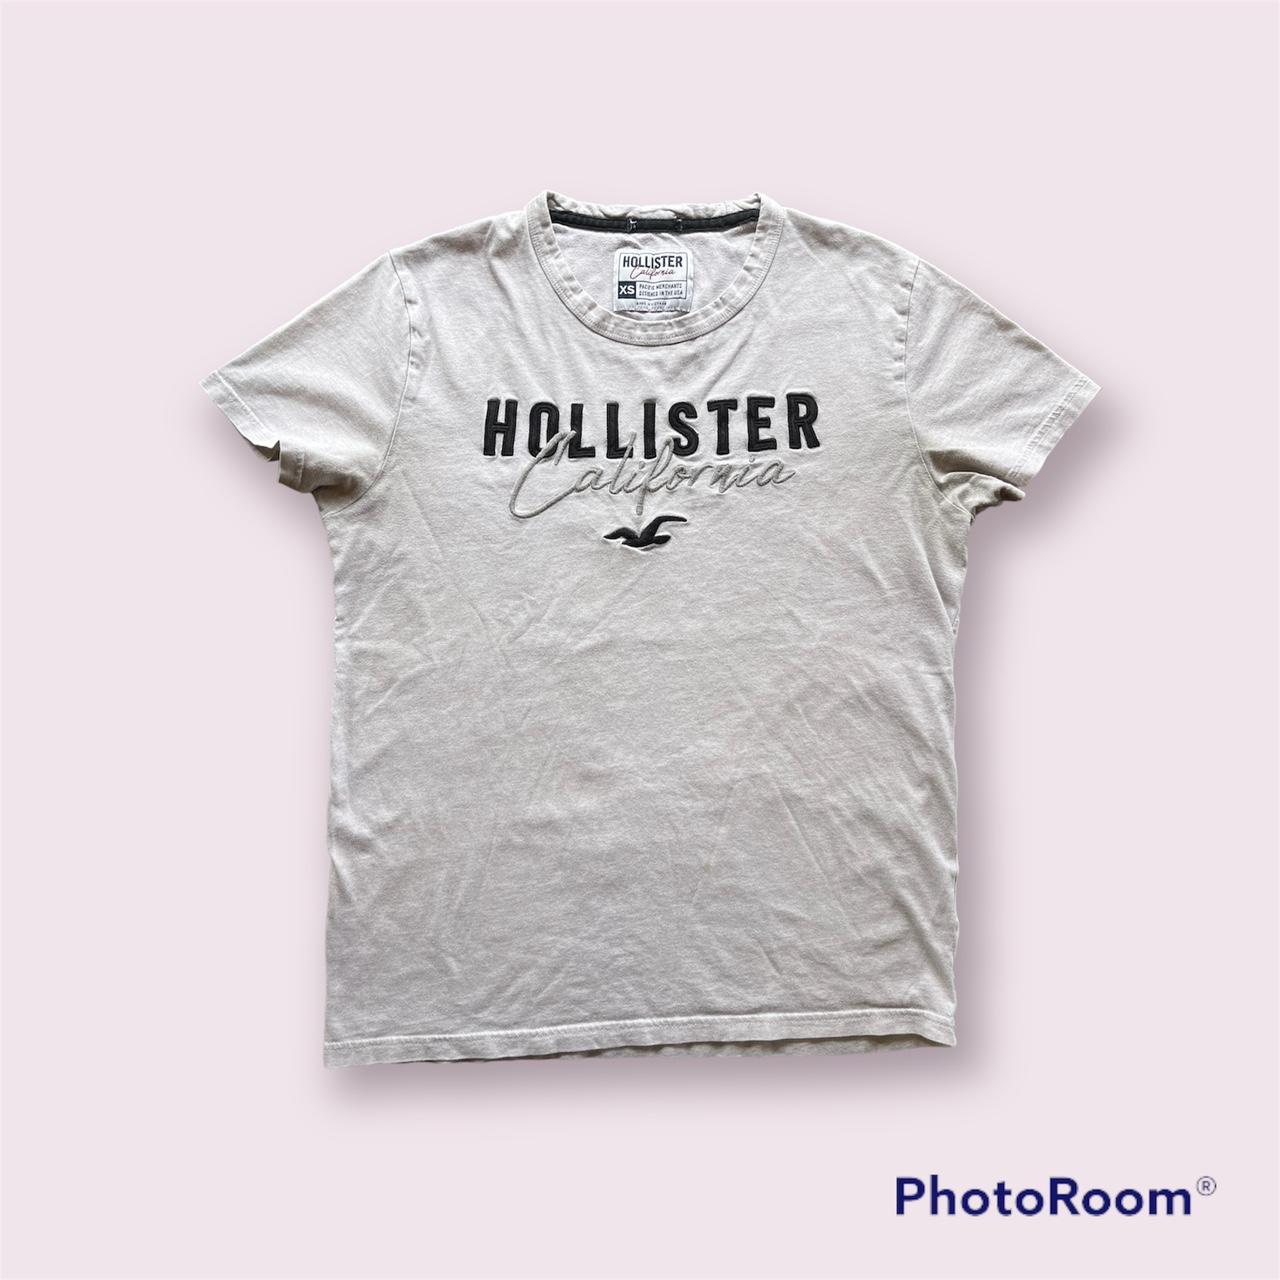 Hollister, California men’s T-shirt size extra small